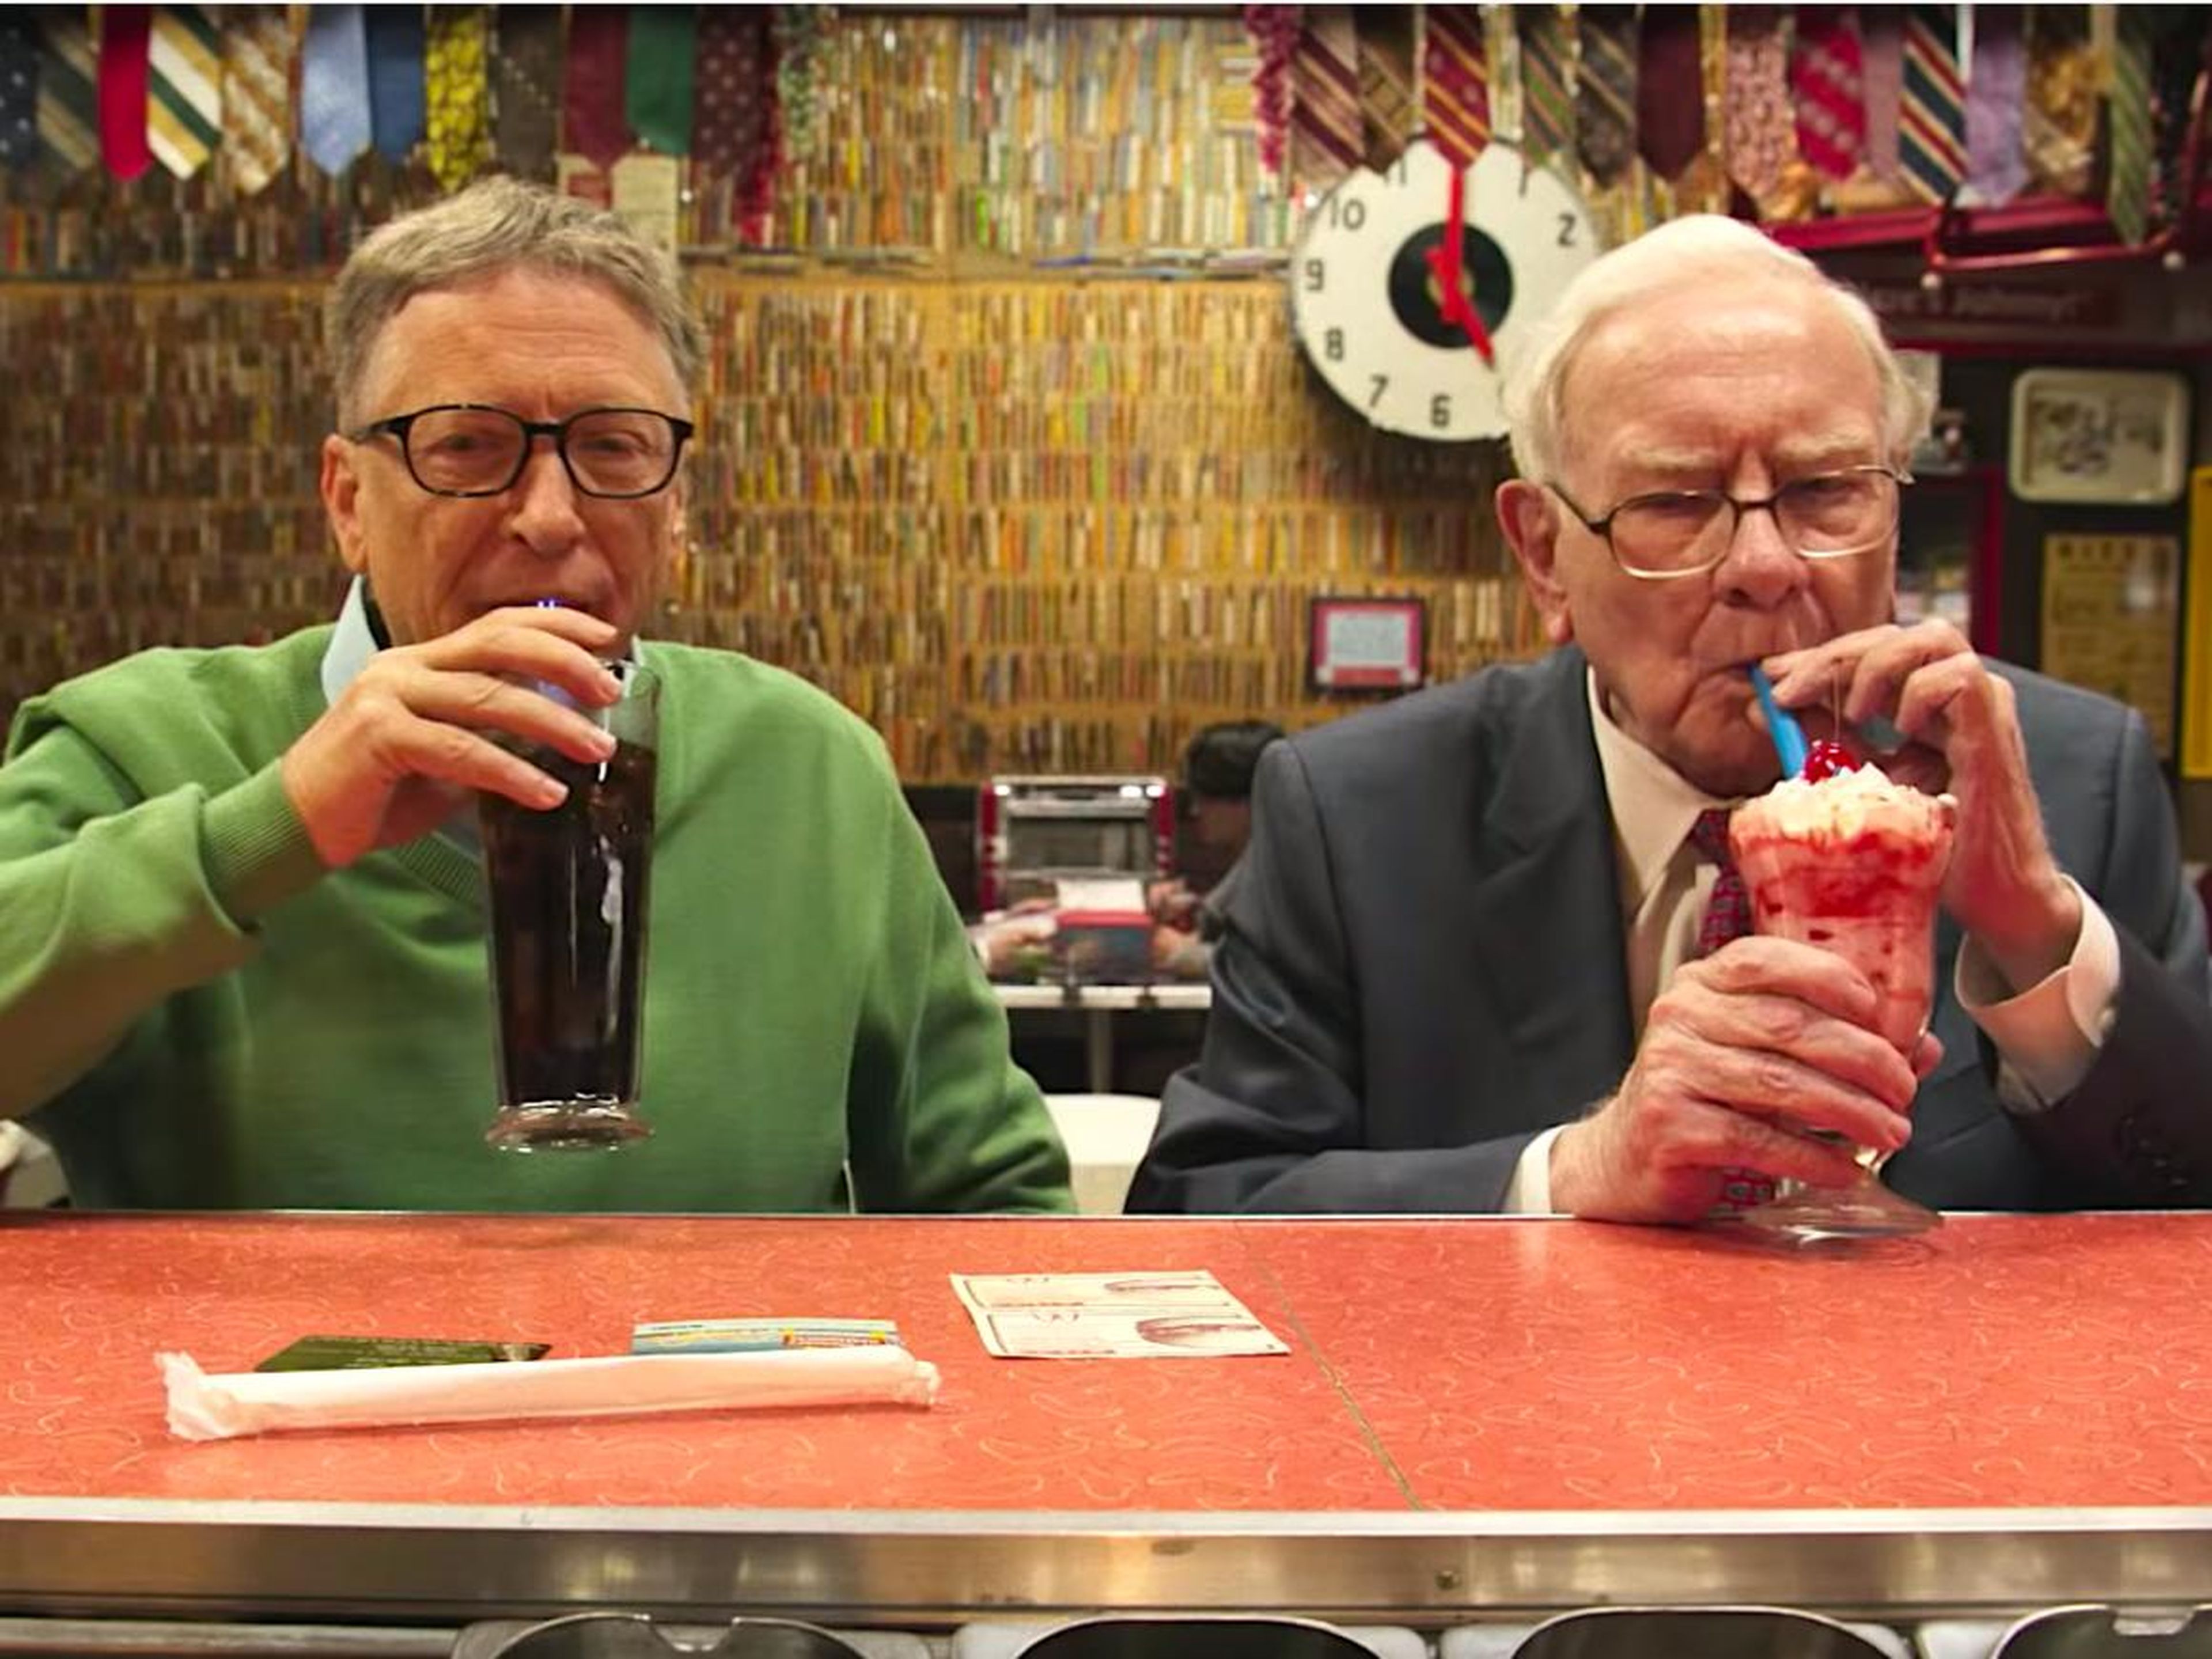 Bill Gates and Warren Buffett in a candy shop.